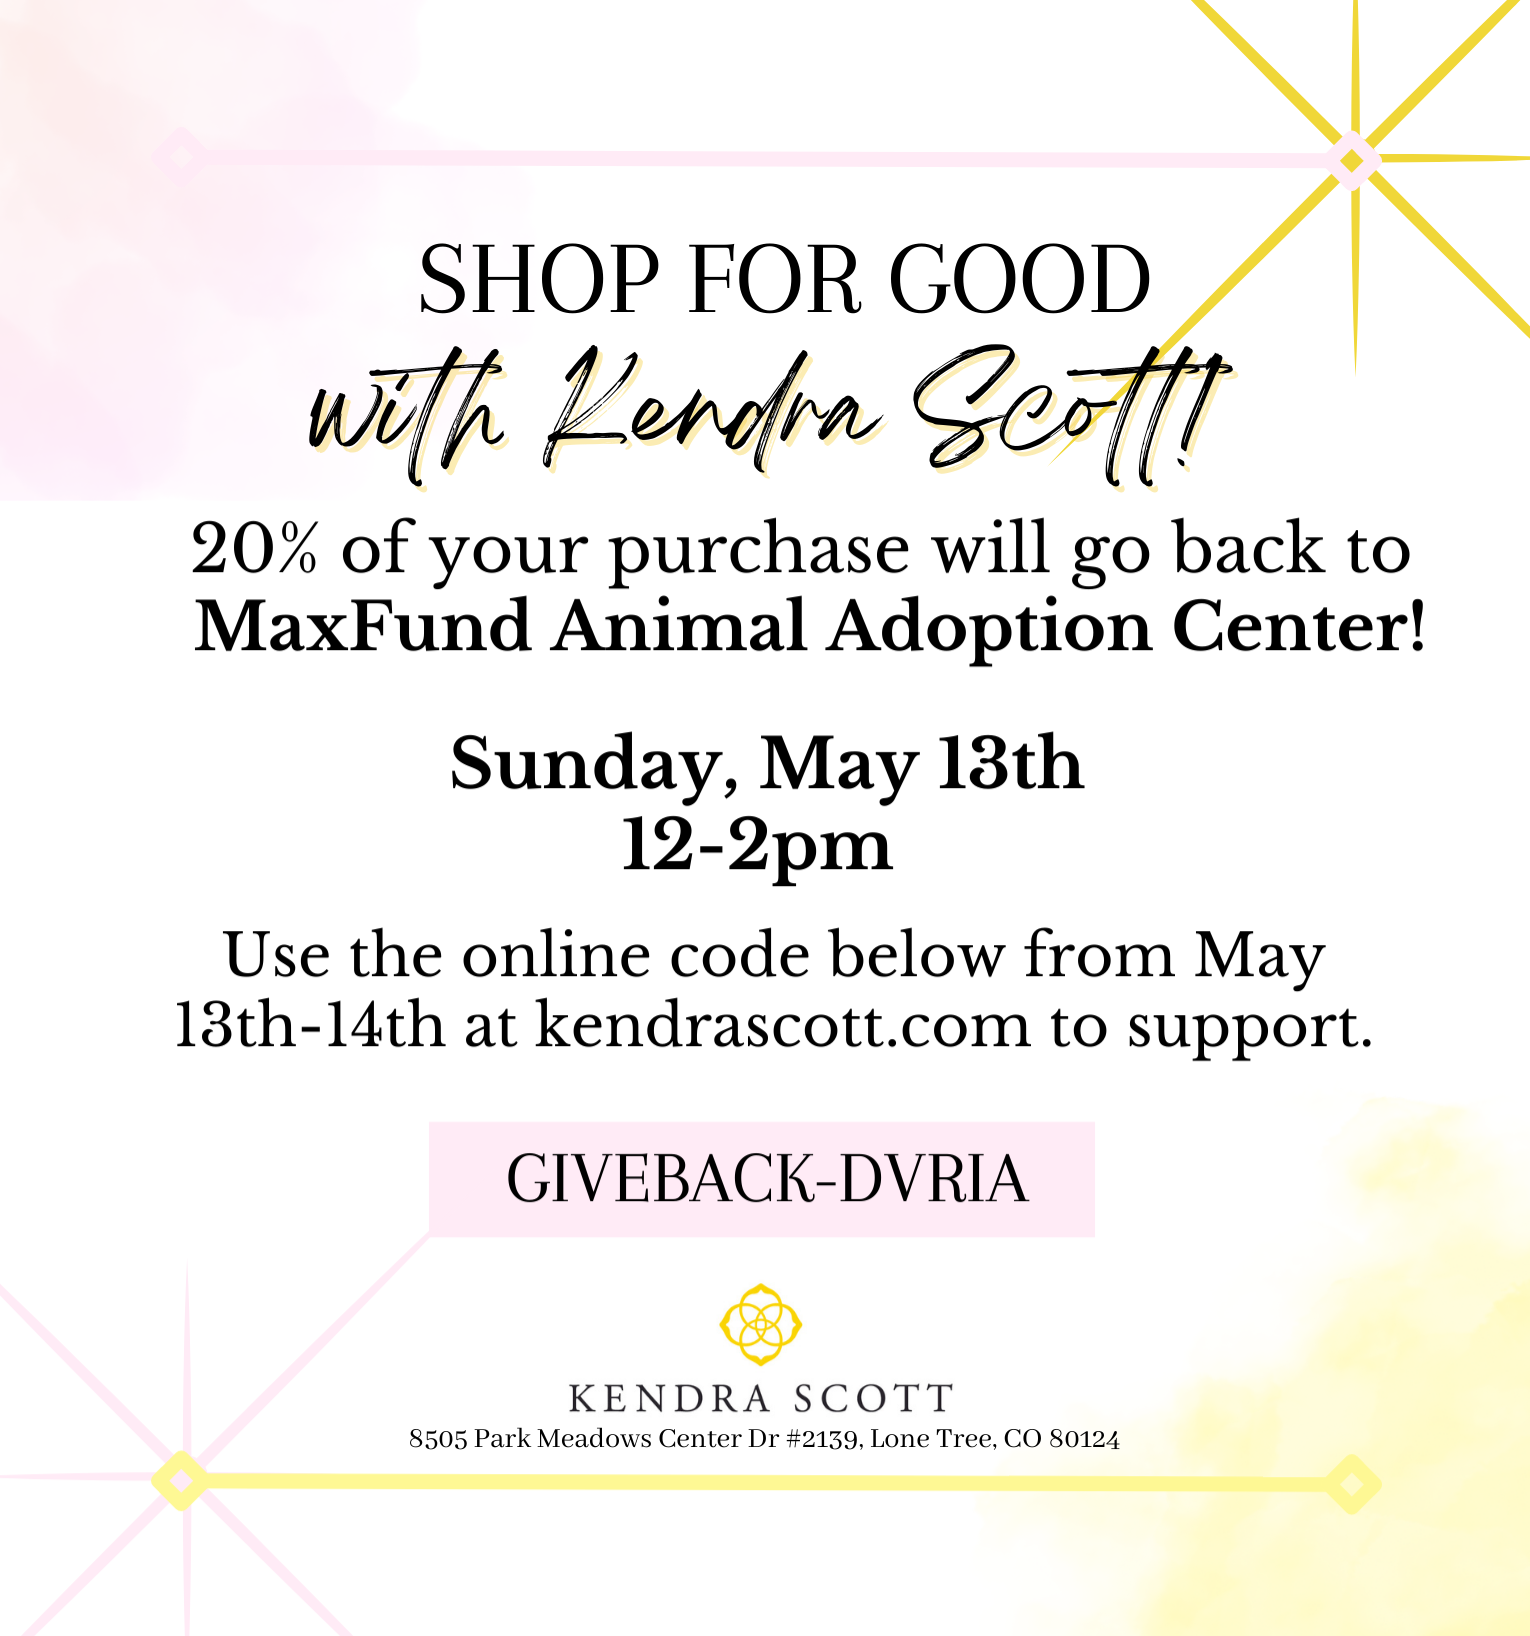 Fundraiser with Kendra Scott